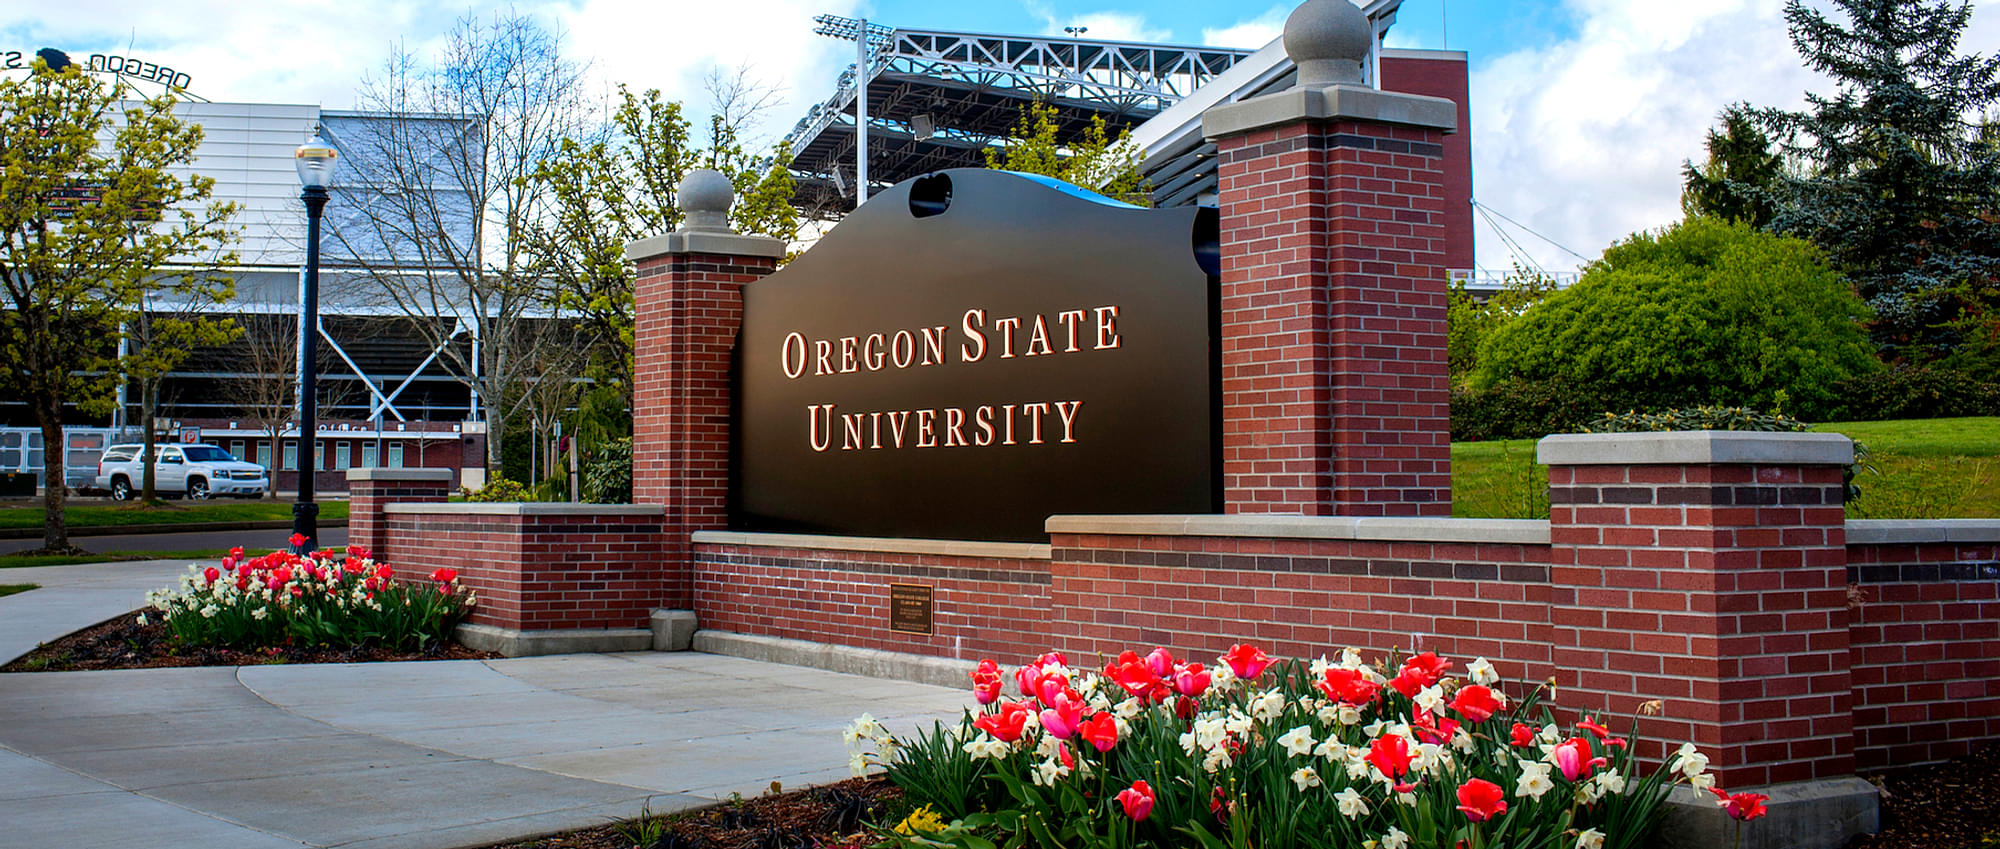 Oregon State University Rankings 2020: World Rankings, National Ranking,  Subject-wise Rankings 2020